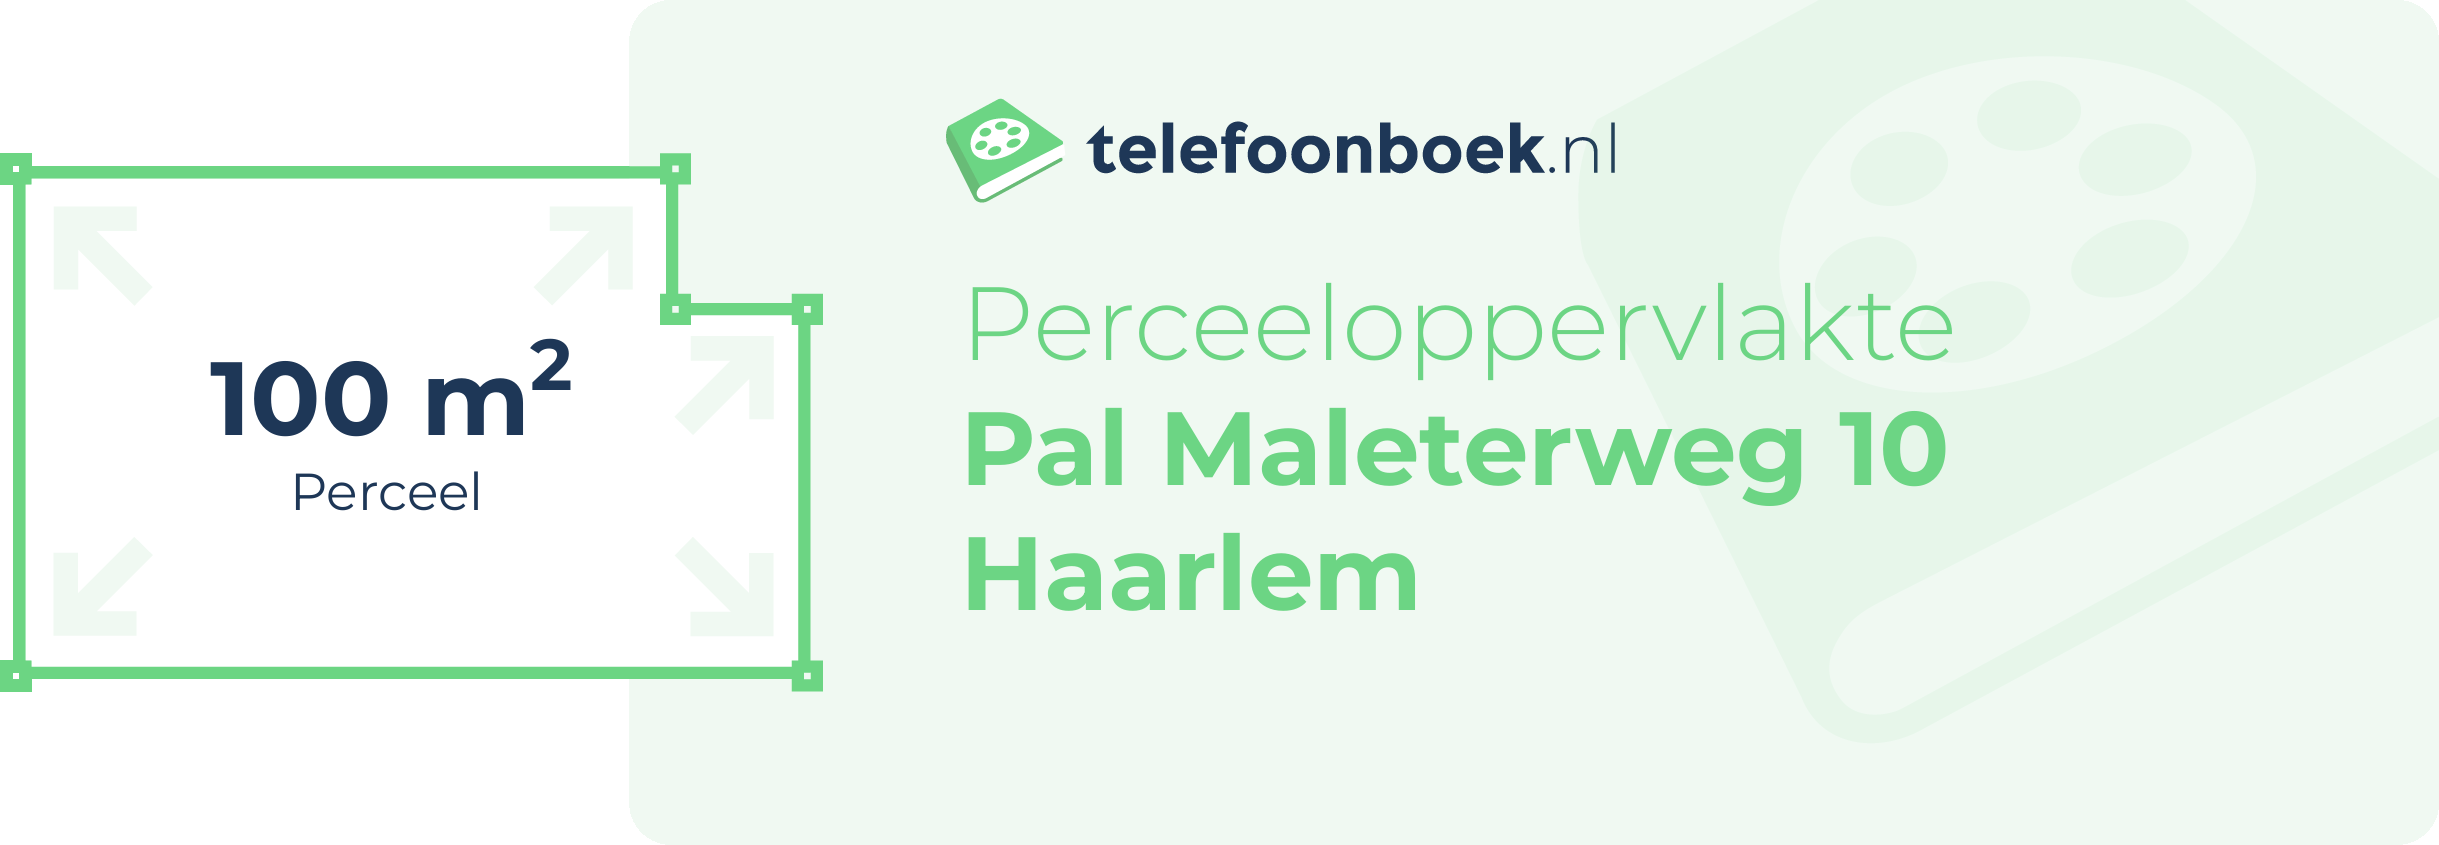 Perceeloppervlakte Pal Maleterweg 10 Haarlem